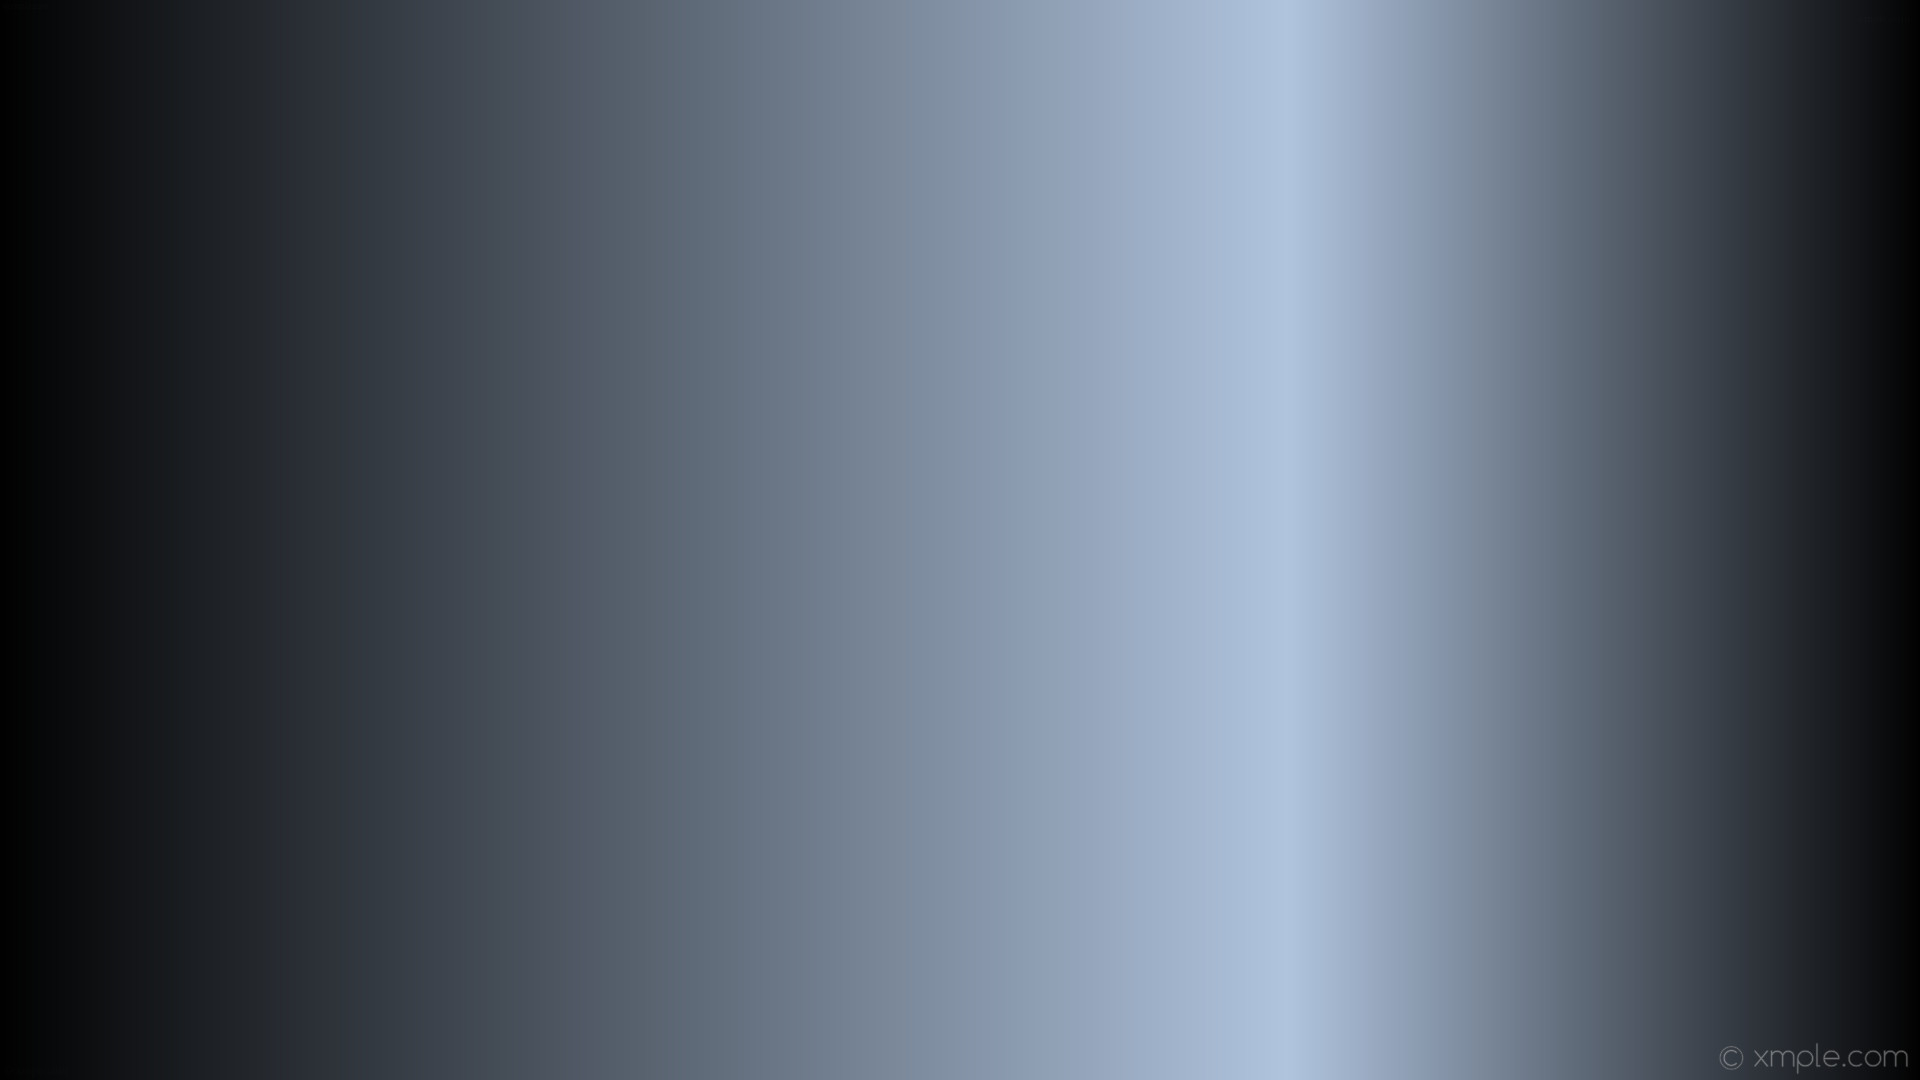 1920x1080 wallpaper linear highlight blue gradient black light steel blue #000000  #b0c4de 0Â° 33